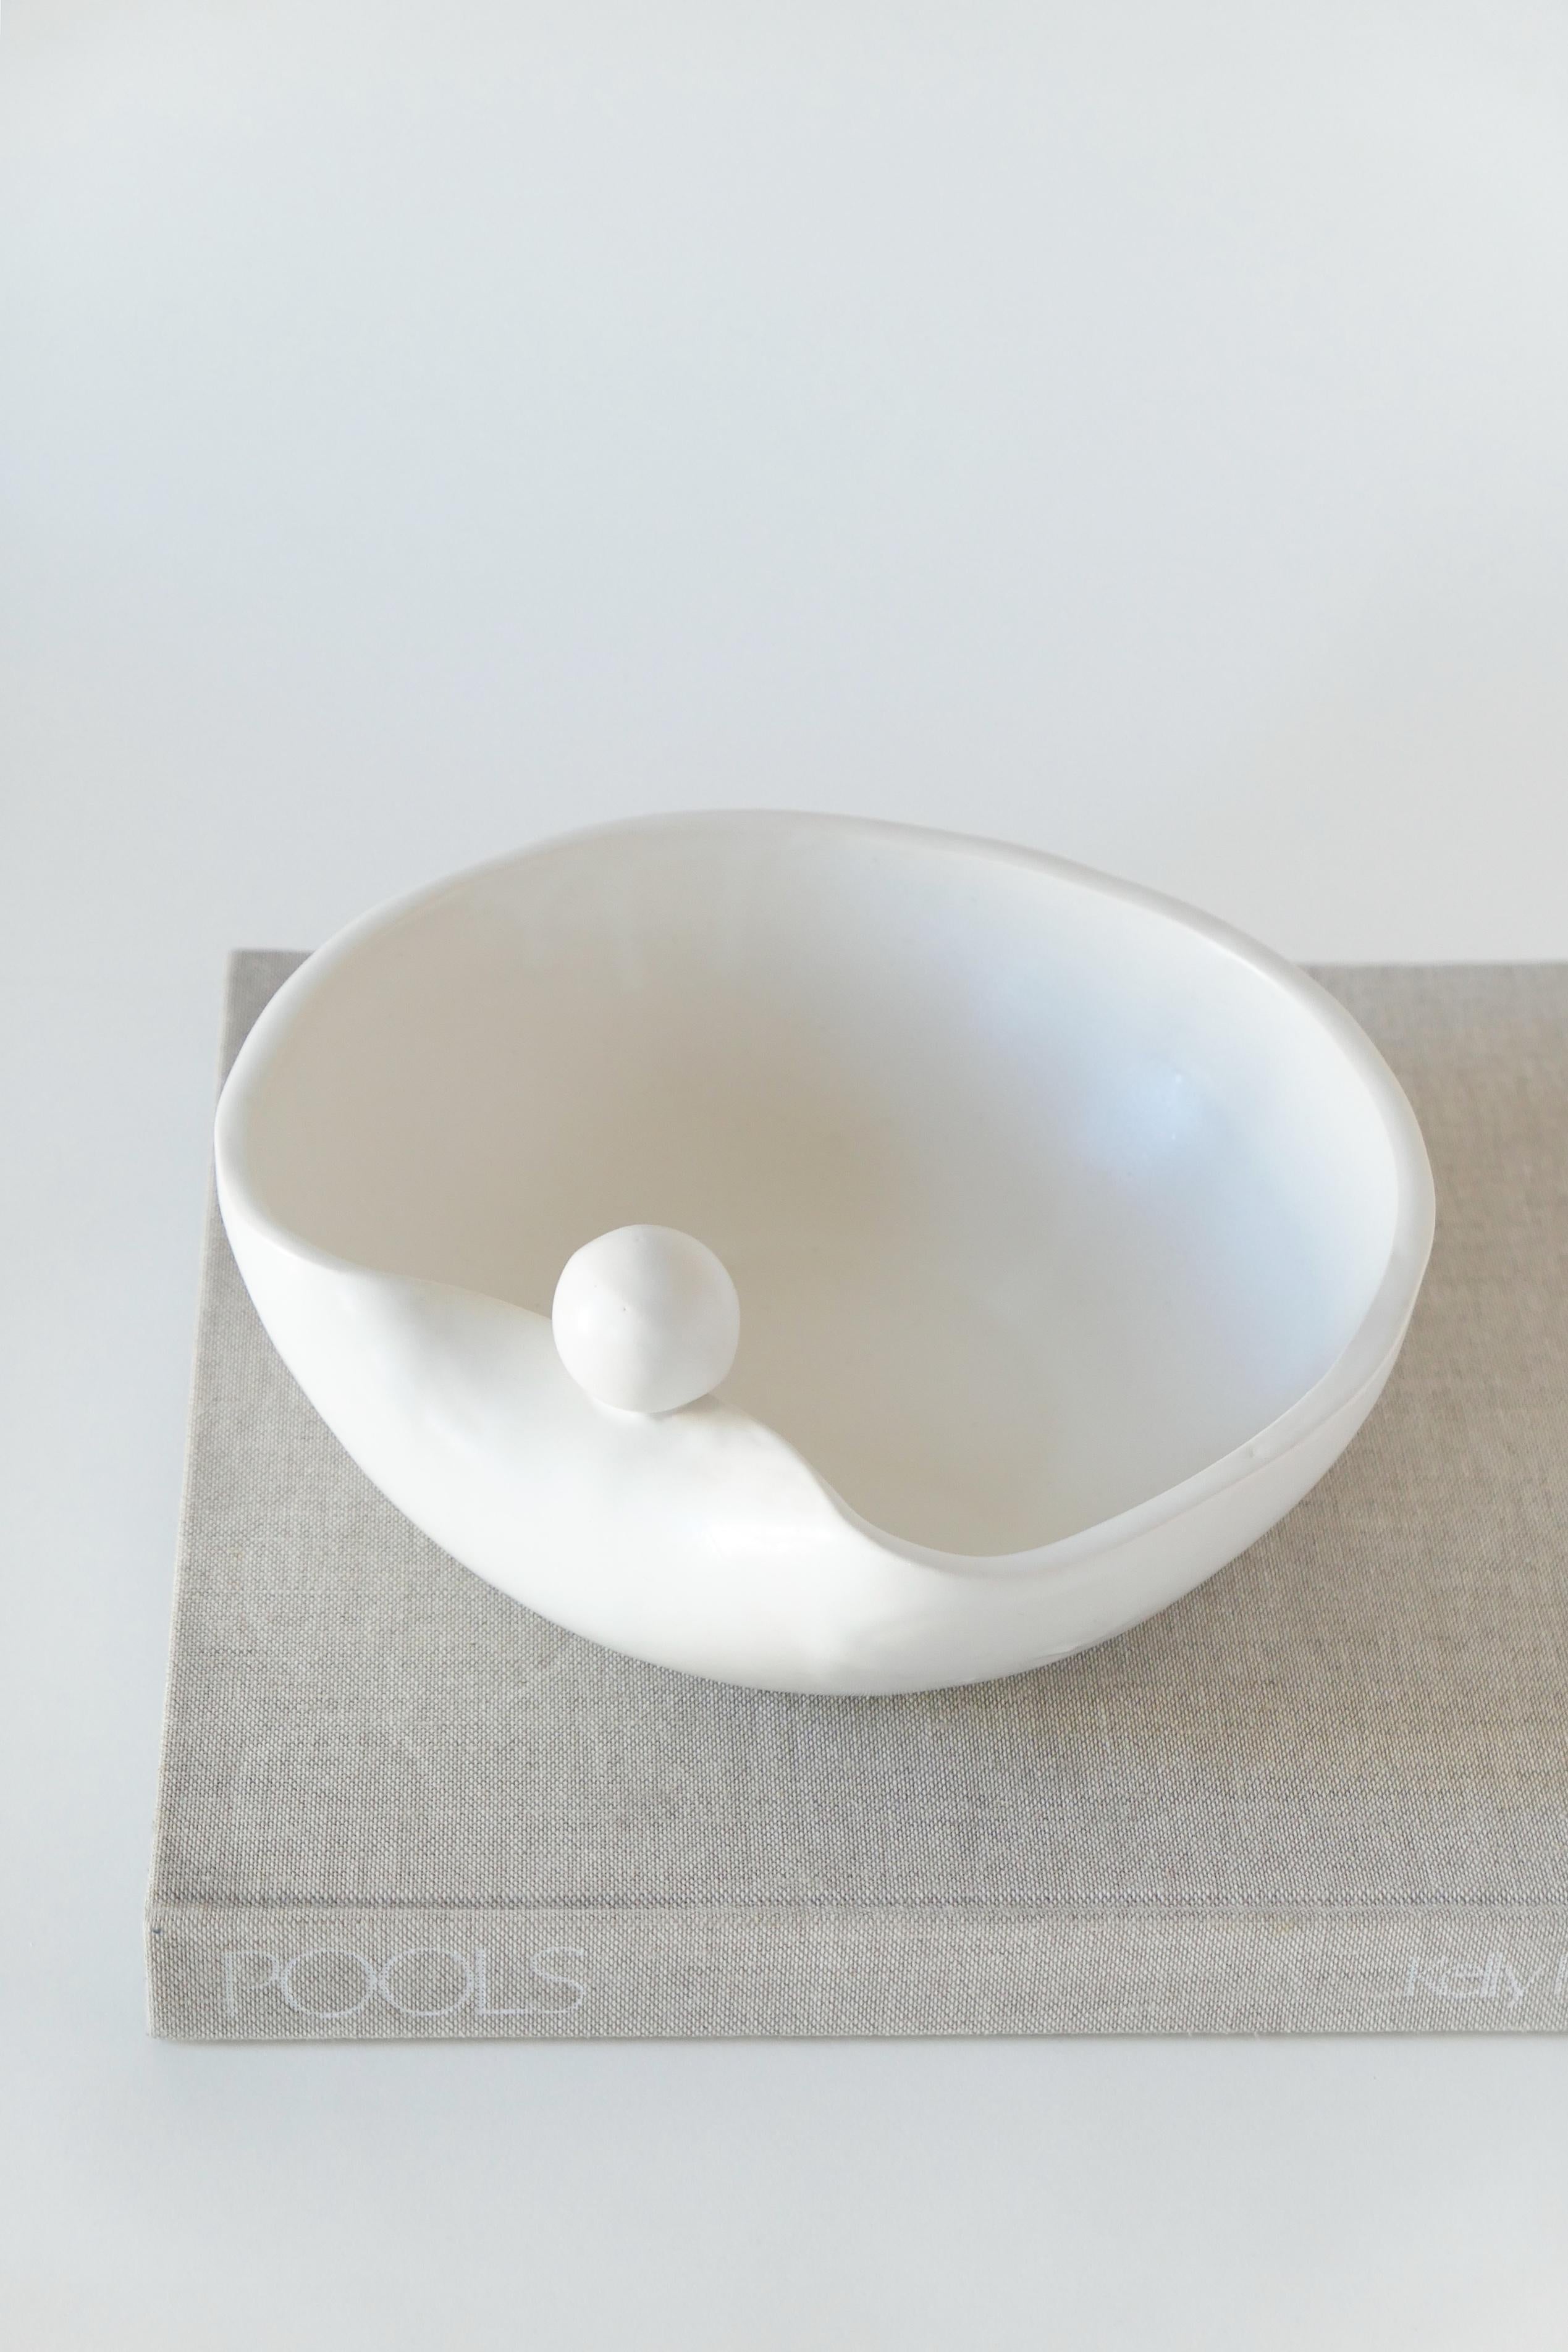 Hand-Carved Decorative Contemporary Curved Handmade Ceramic Bowl For Sale